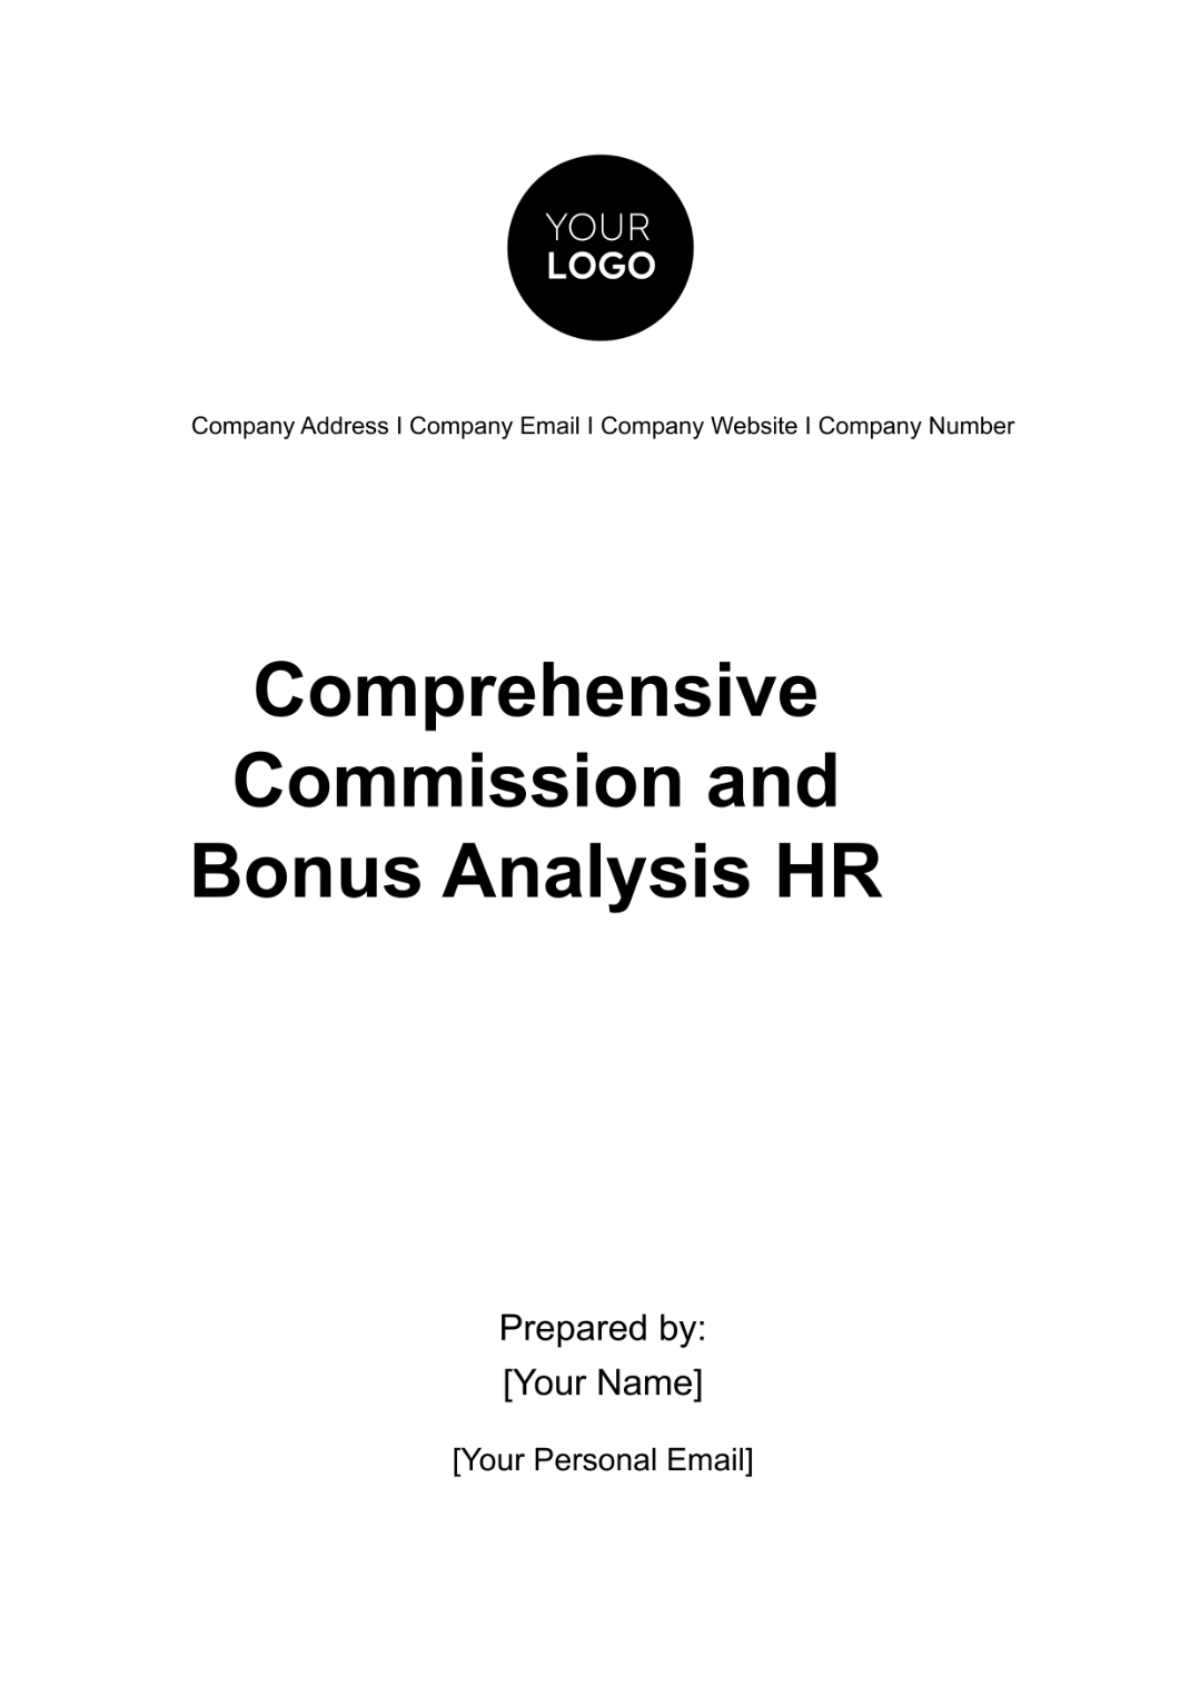 Comprehensive Commission and Bonus Analysis HR Template